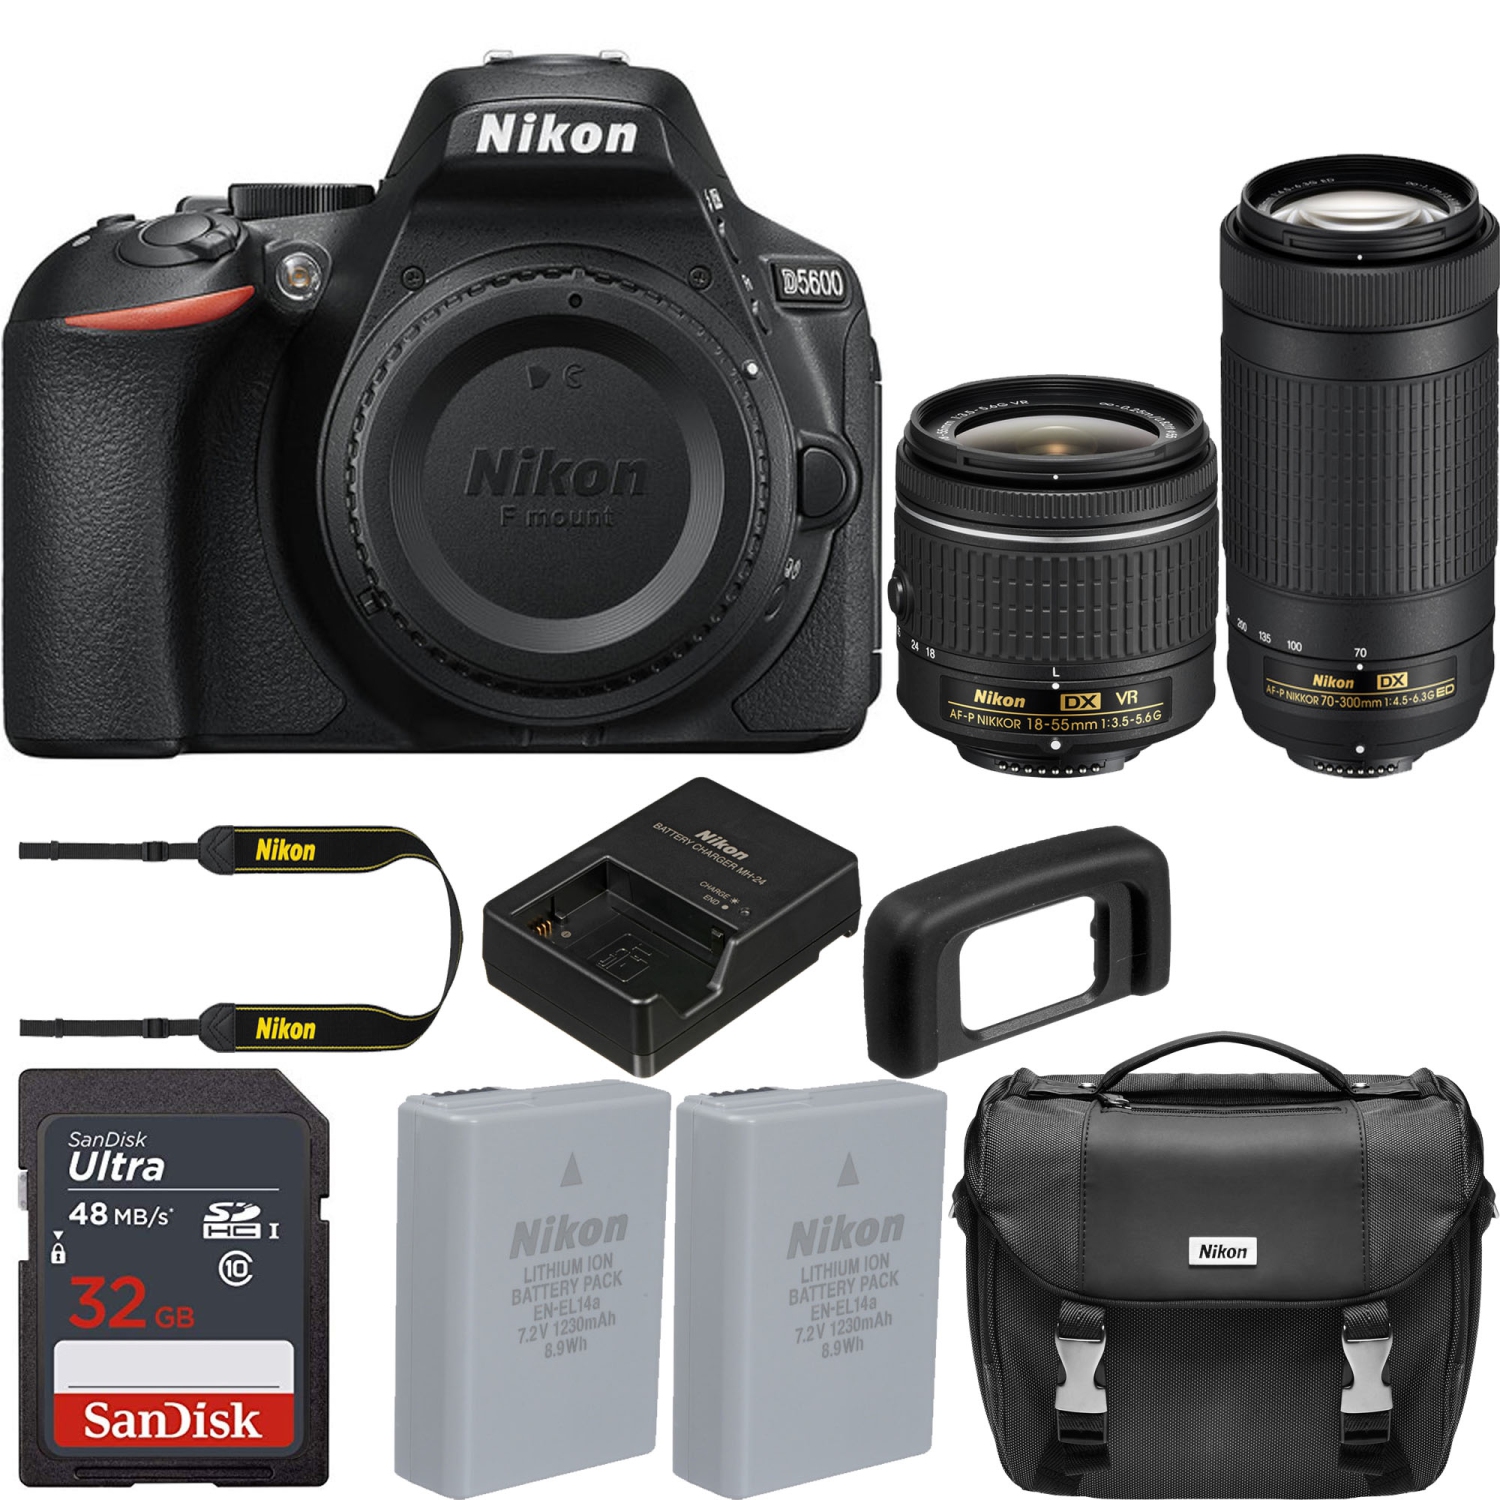 Nikon D5600 DSLR Camera with 18-55mm and 70-300mm Lenses | Sandisk 32GB Memory Card | Nikon Case | Spare Battery Bundle - US Version w/ Seller Warranty